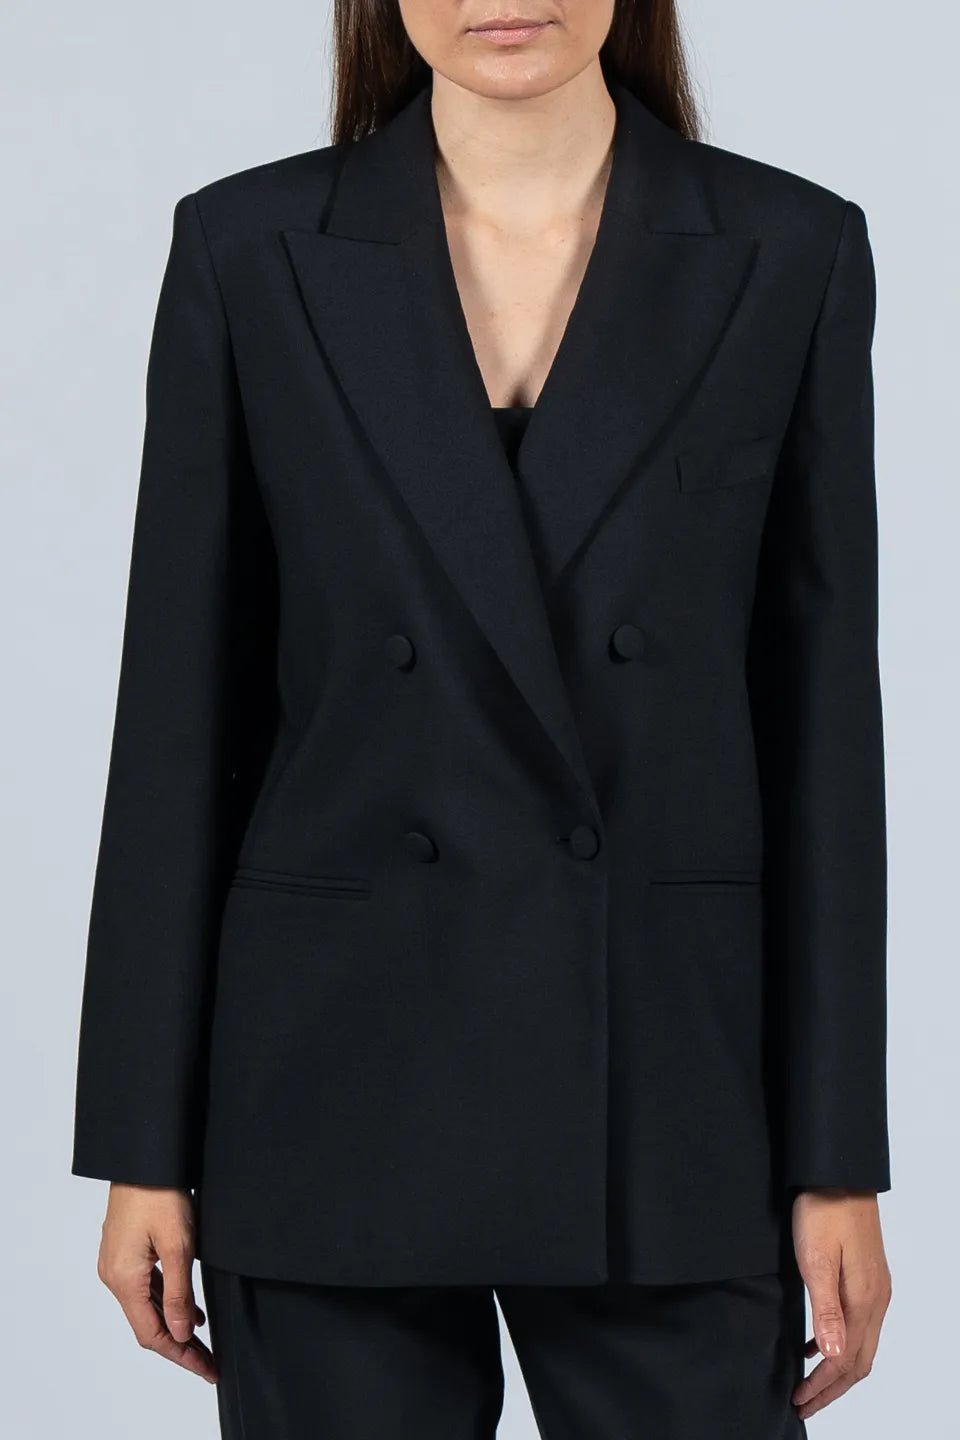 Shop online trendy Black Women blazers, Jacket from Federica Tosi Fashion designer. Product gallery 1